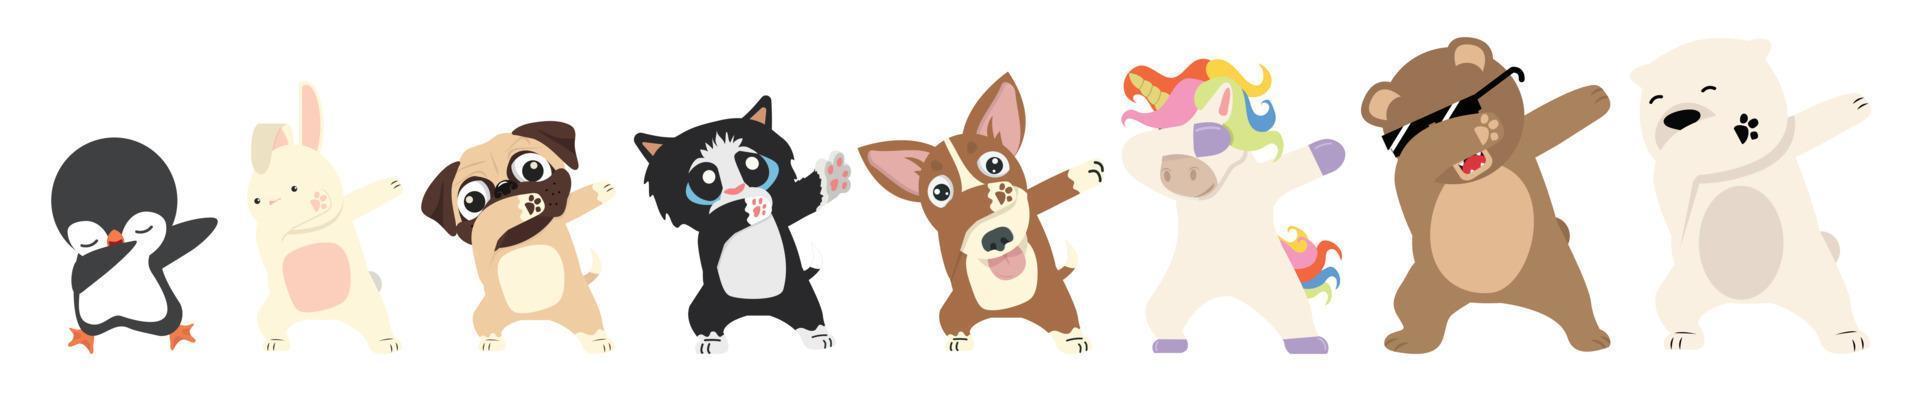 Dabbing animals dancing sign cartoon set vector